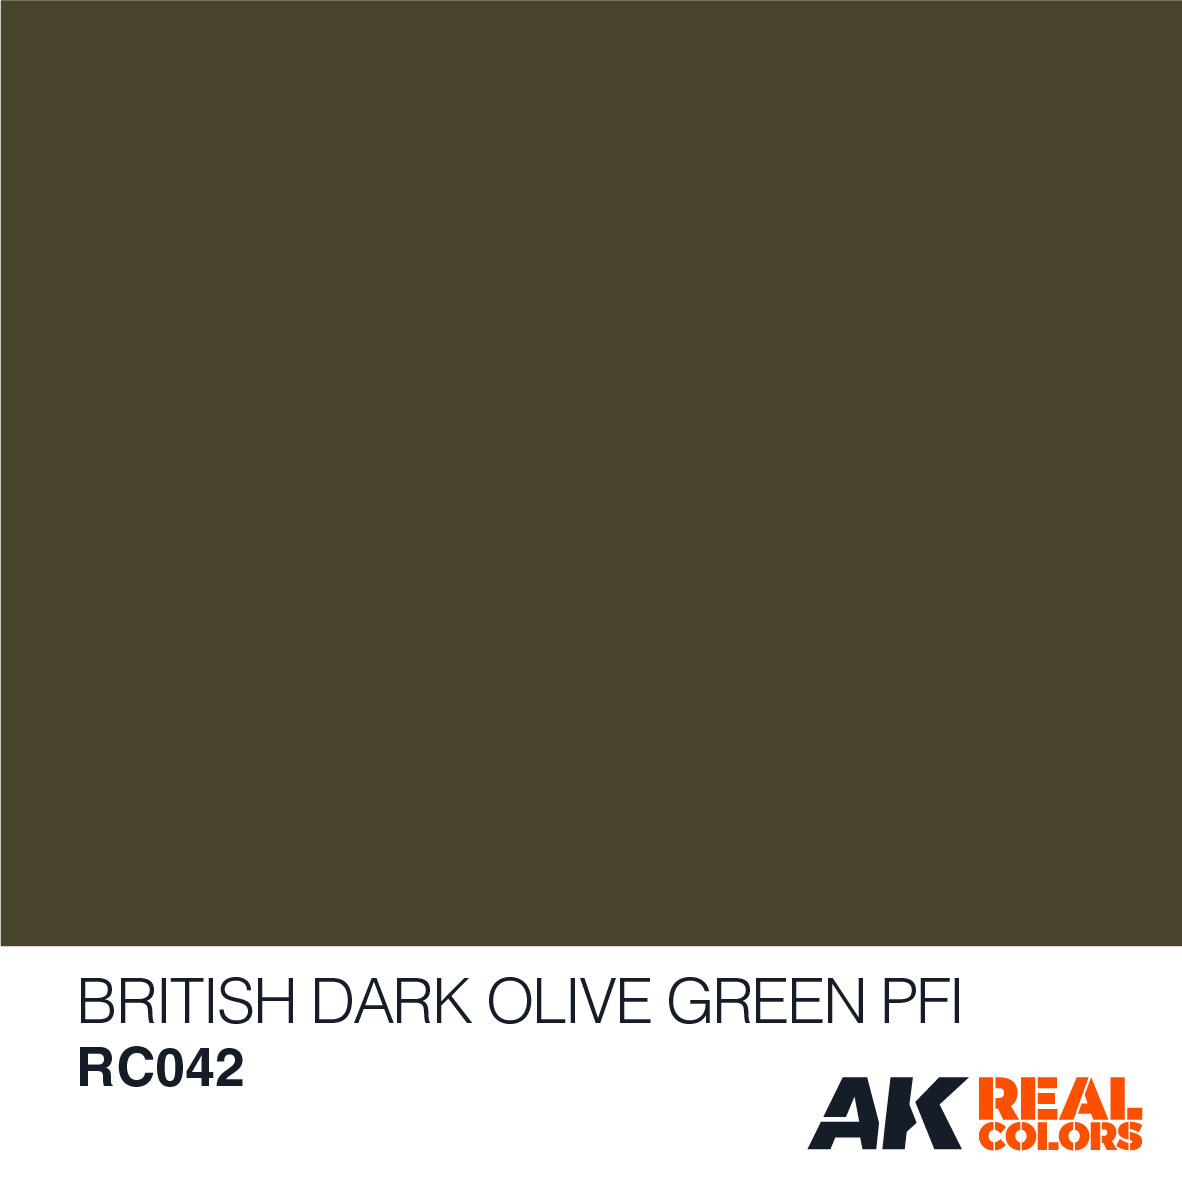 Buy British Dark Olive Green PFI online for 2,75€